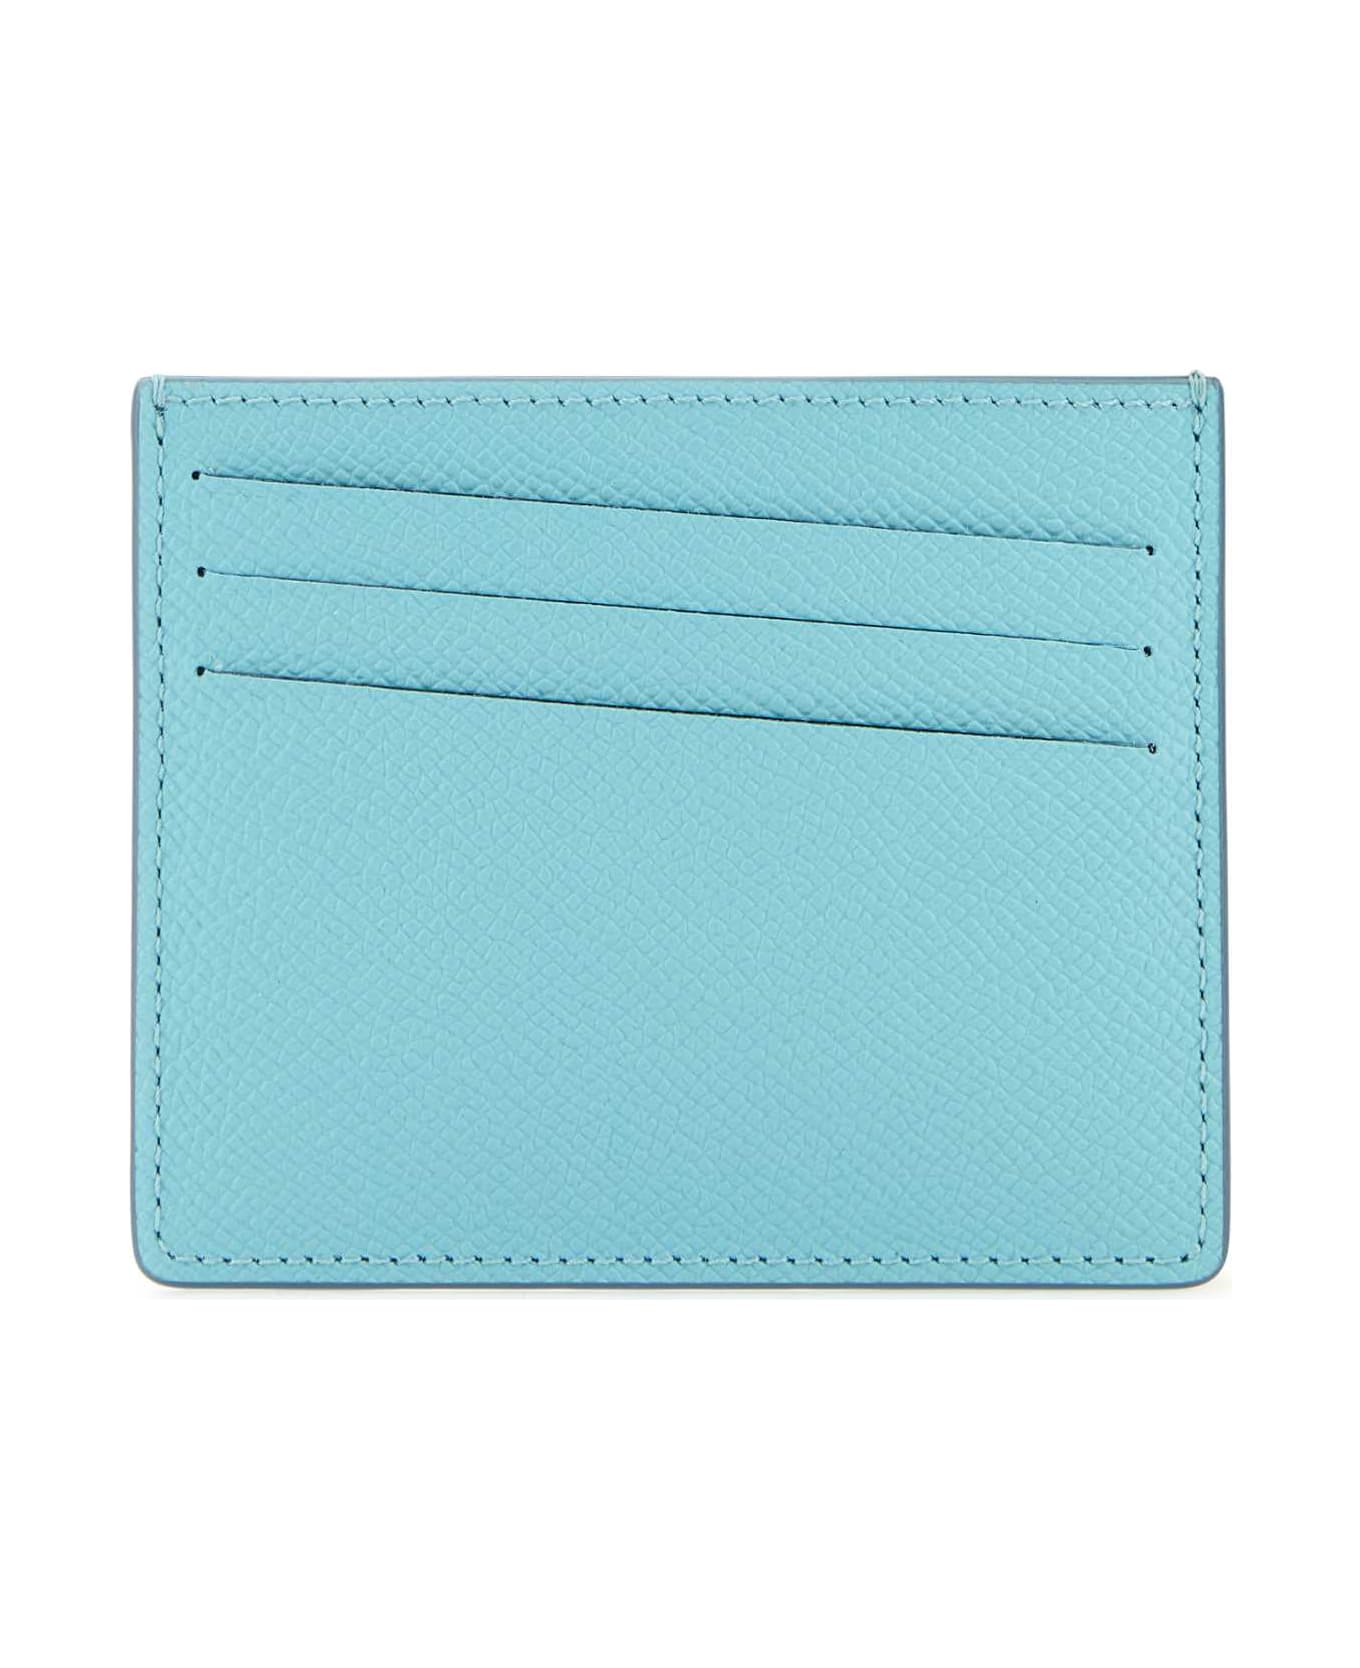 Maison Margiela Light-blue Leather Four Stitches Cardholder - AQUA 財布